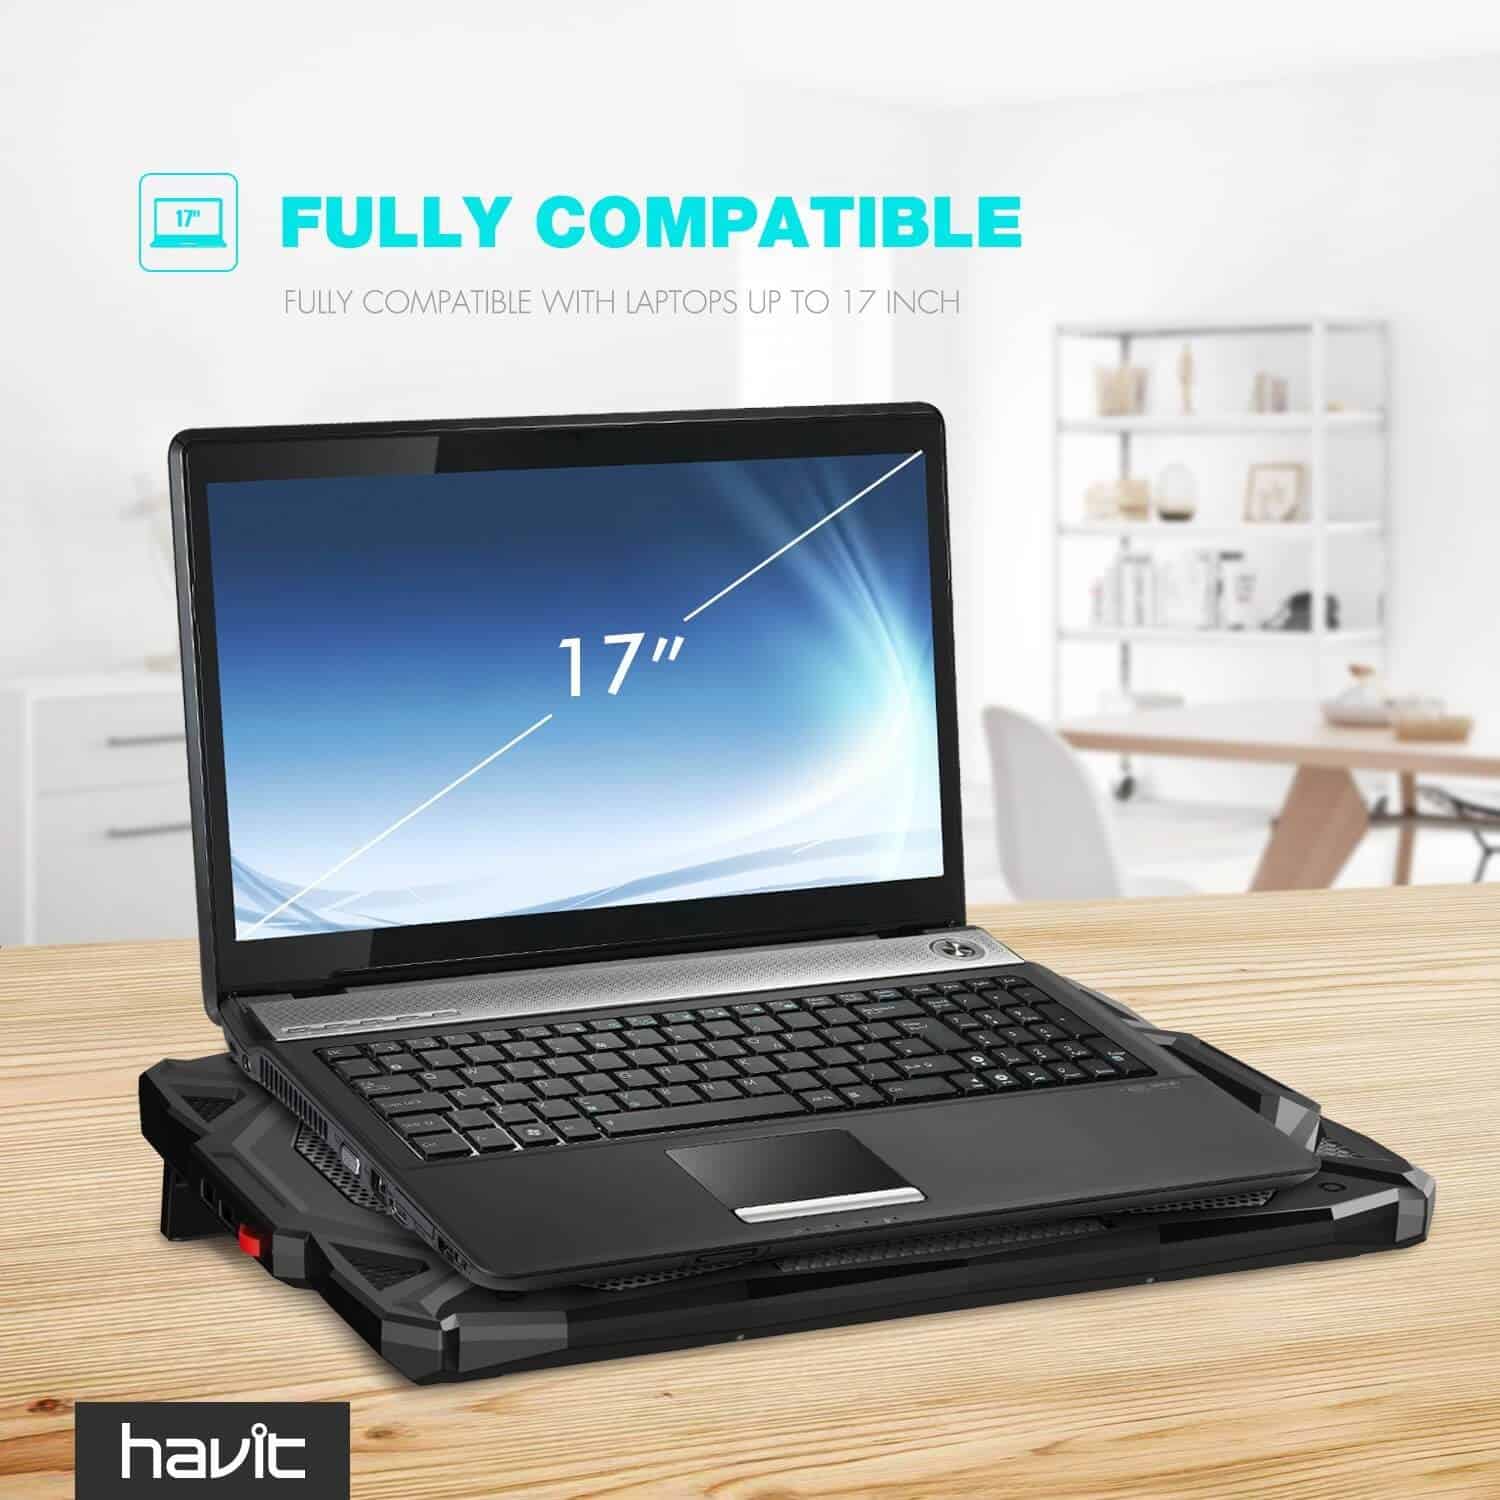 HAVIT HV-F2068 5-Fan Laptop Cooler for 14-17 Inch Laptops